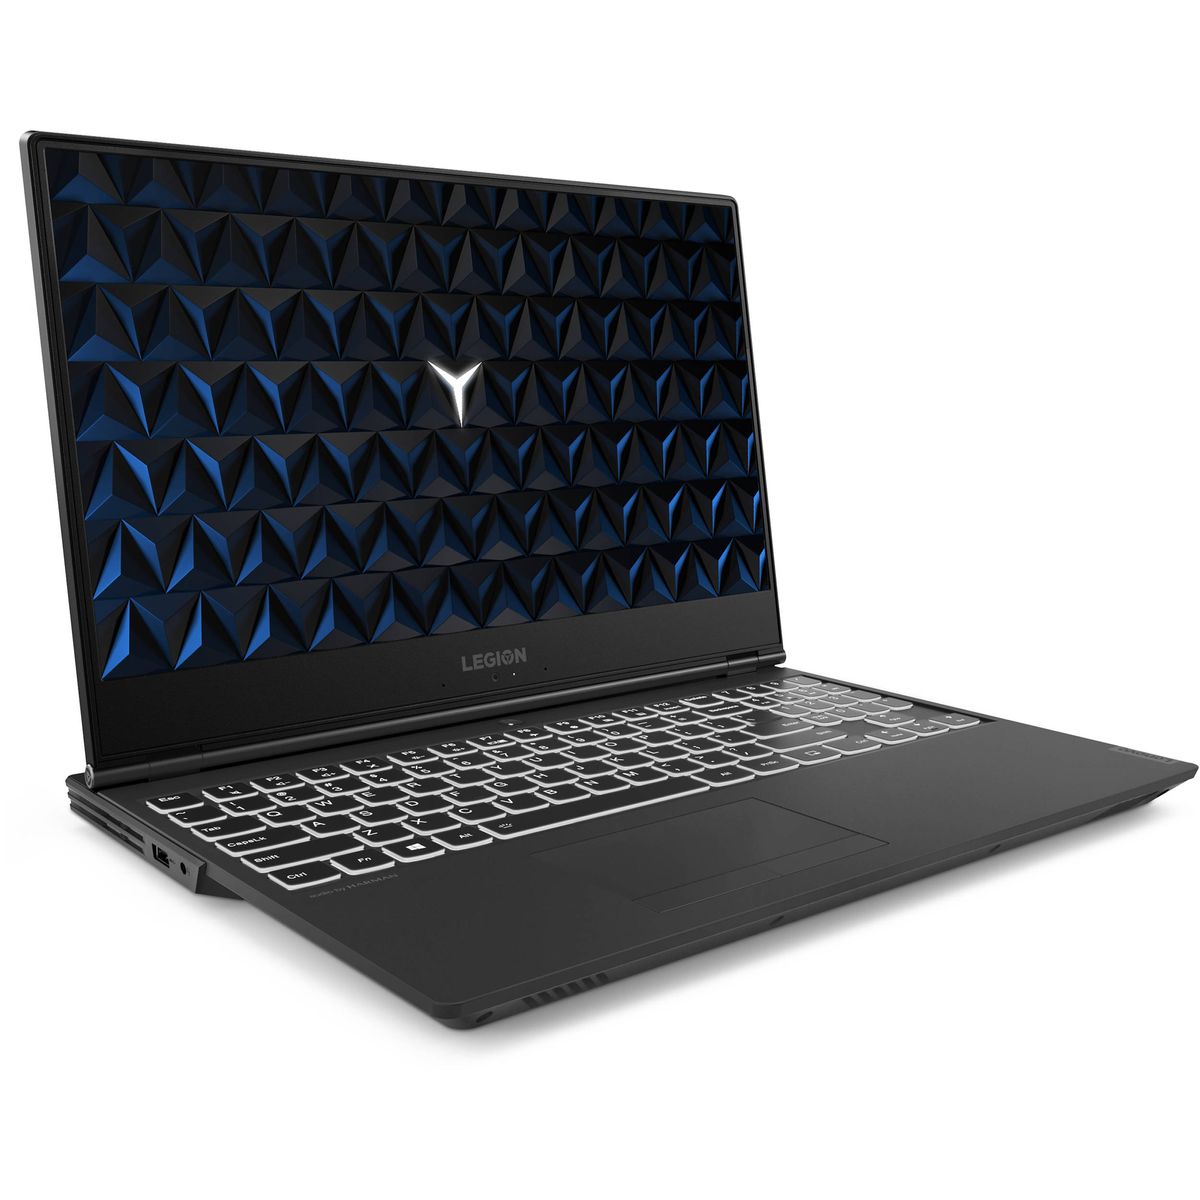 Eofy 2020 Laptop Deals In Australia Save A Packet On A Powerhouse Device Techradar